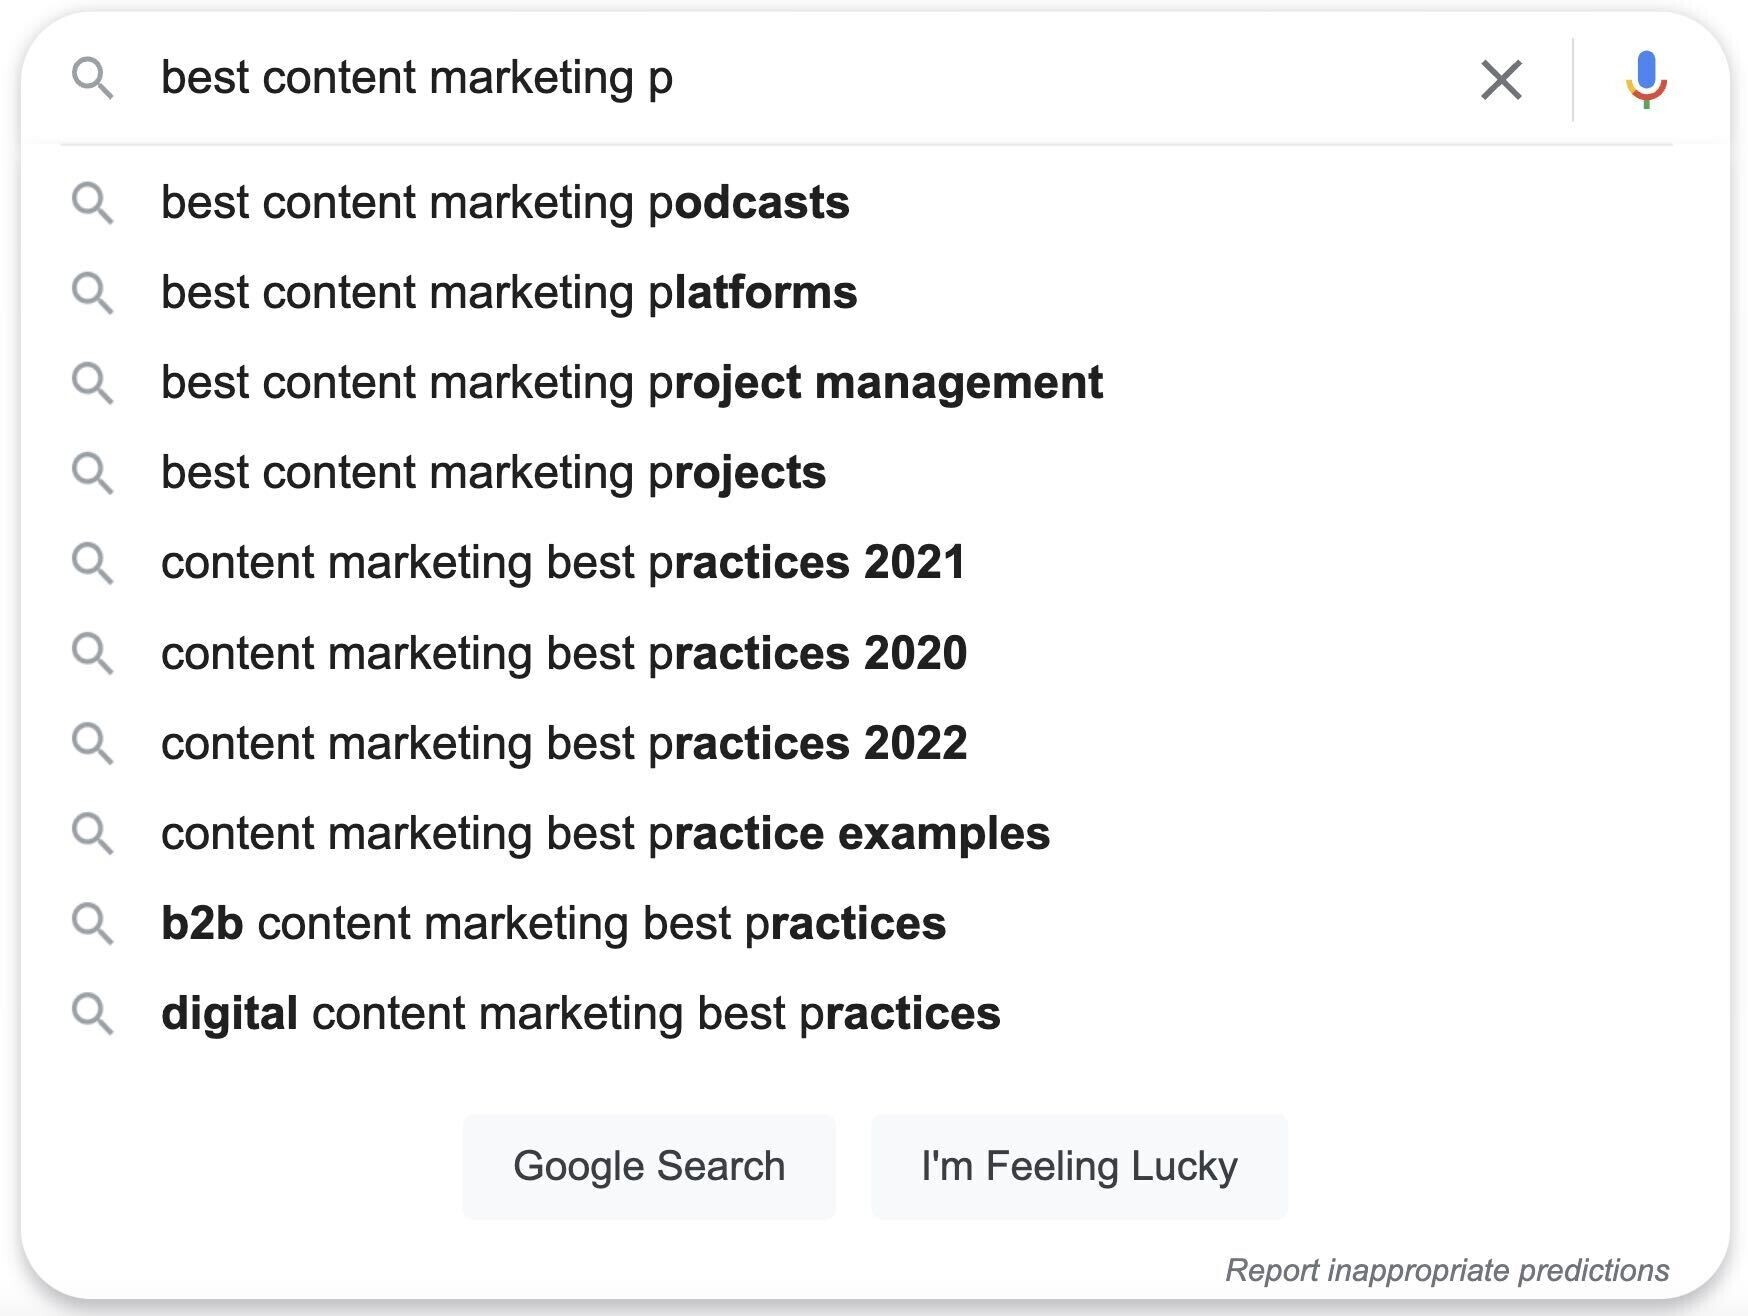 Google autofill for "best content marketing p"